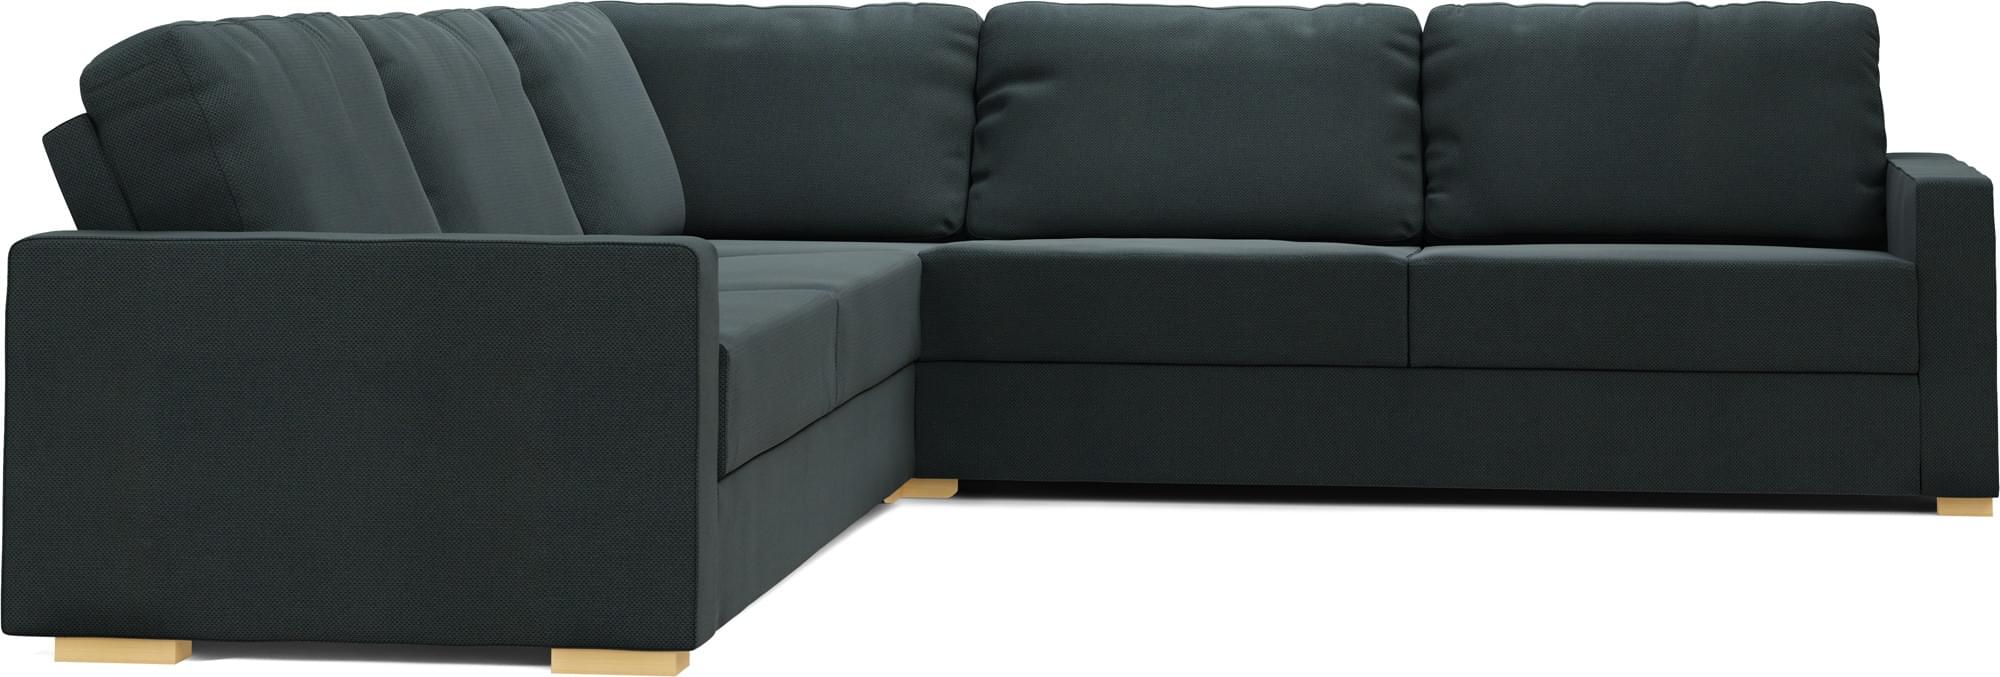 Ula 3X3 Corner Sofa